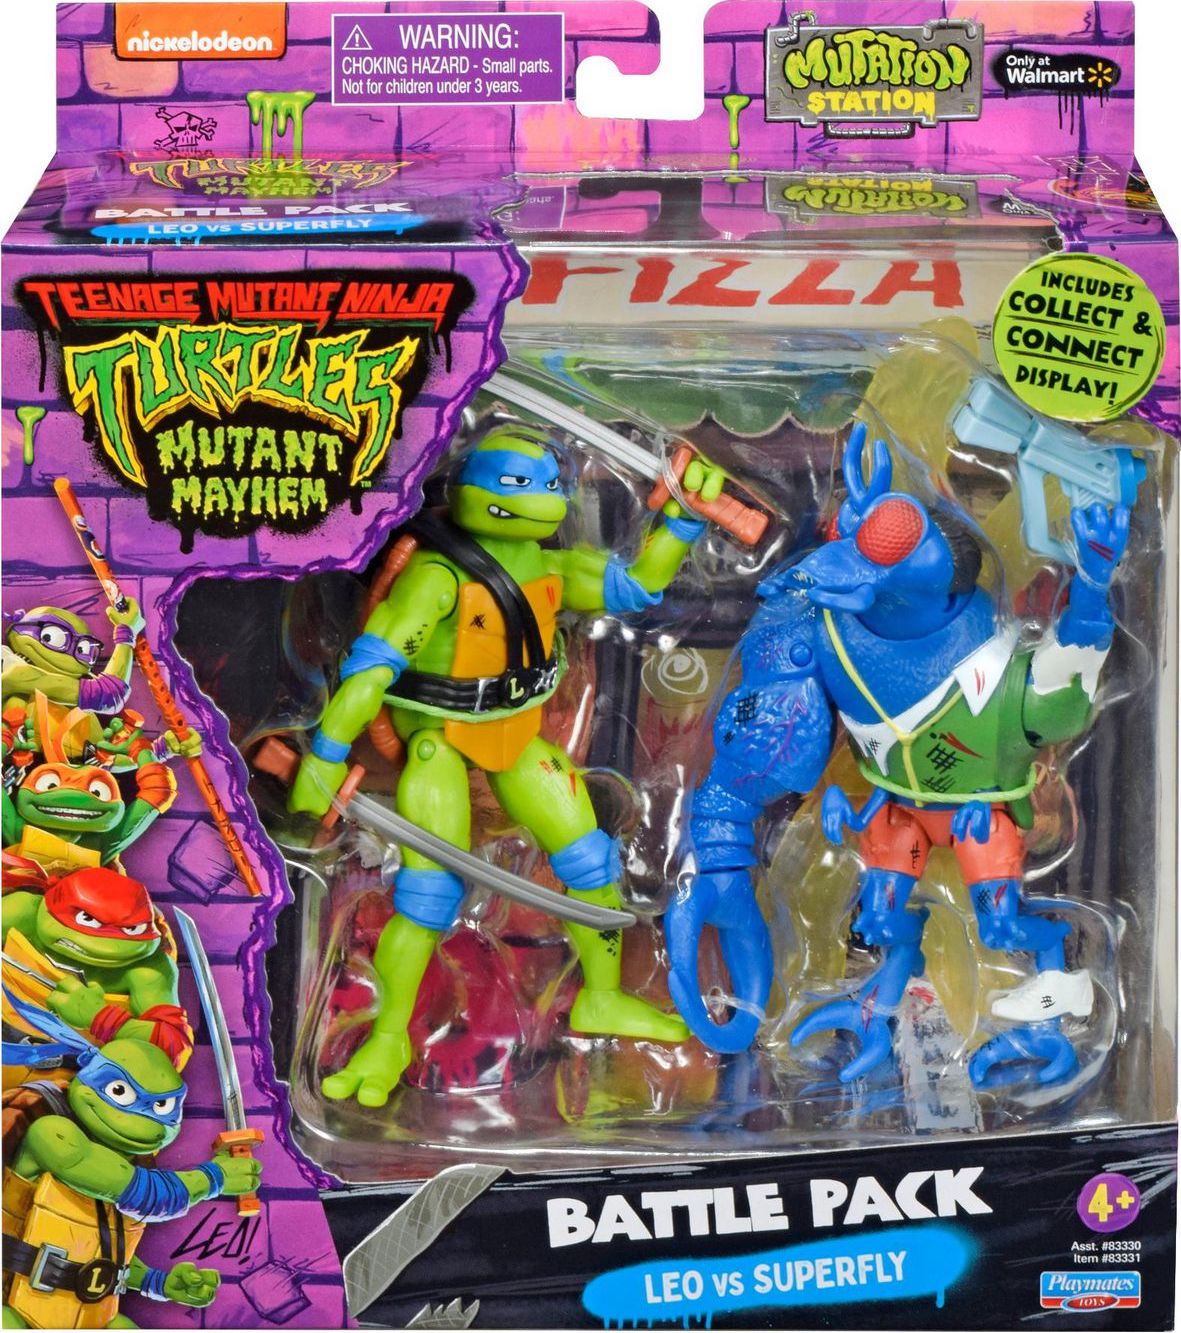 https://www.actionfigure411.com/teenage-mutant-ninja-turtles/images/leo-vs-superfly-battle-pack-7074.jpg